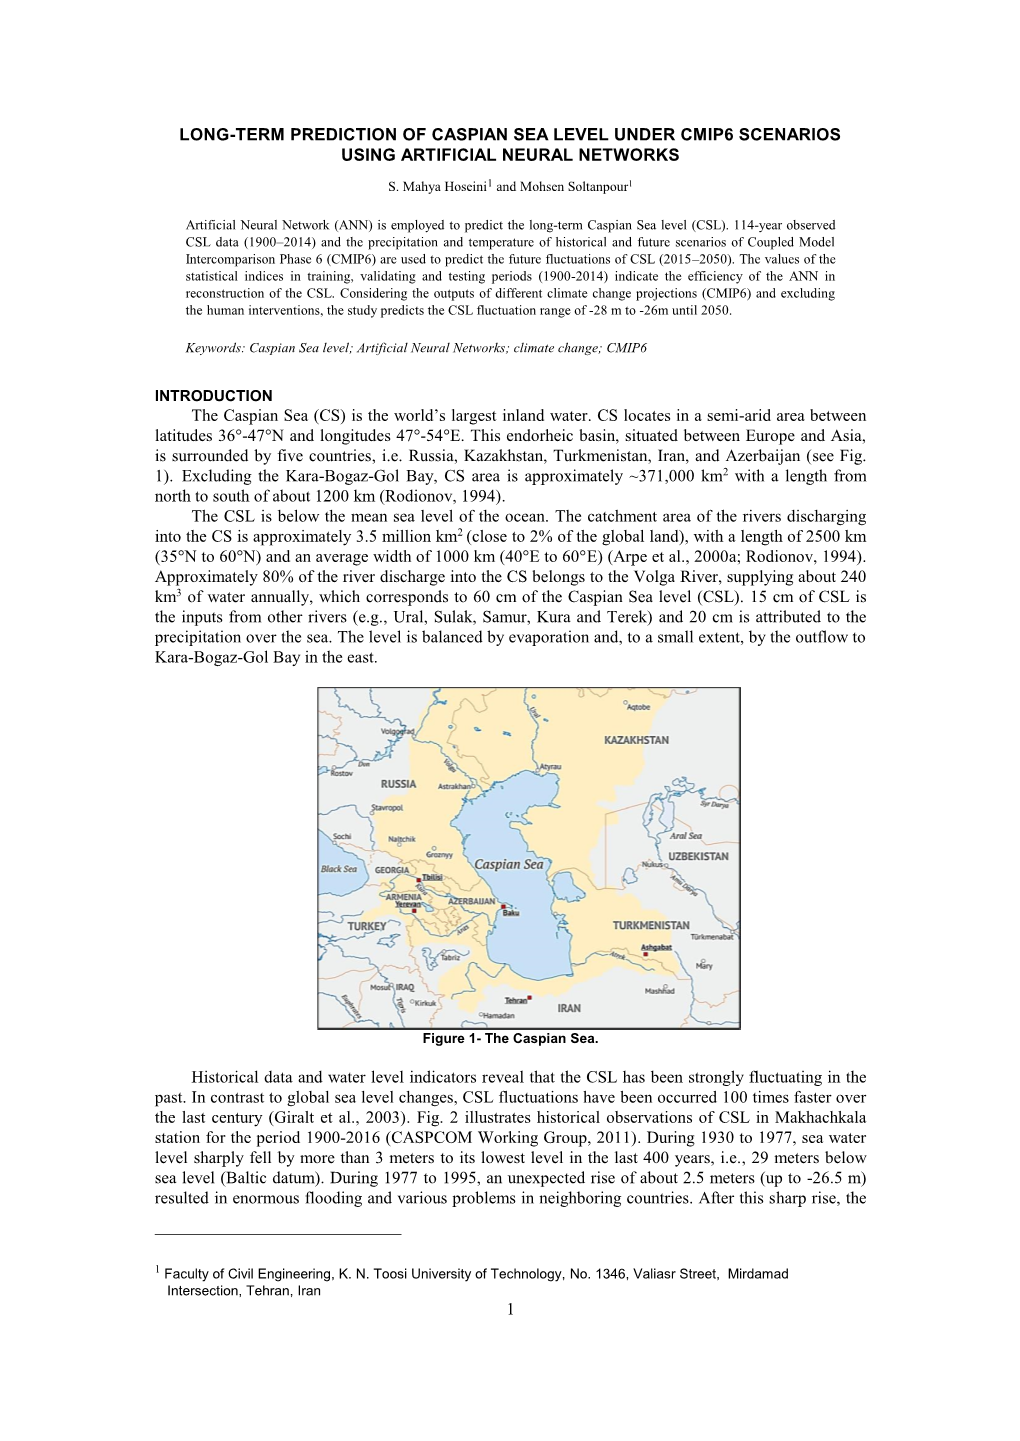 1 Long-Term Prediction of Caspian Sea Level Under